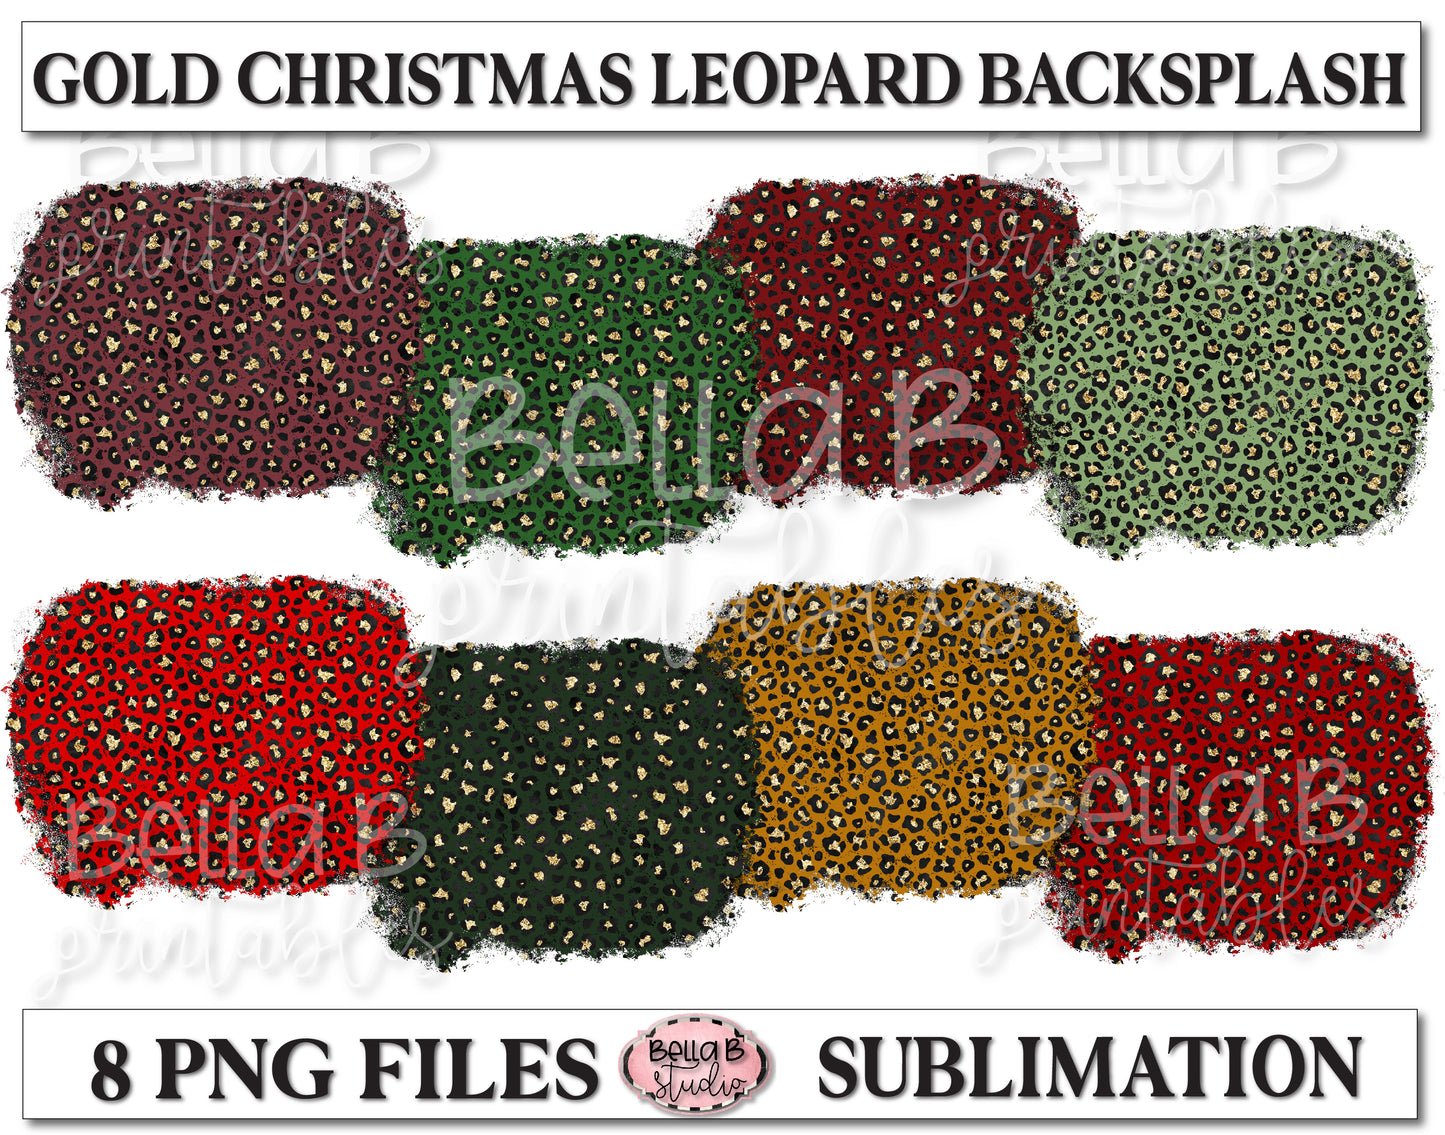 Gold Leopard Christmas Sublimation Background Bundle, Backsplash